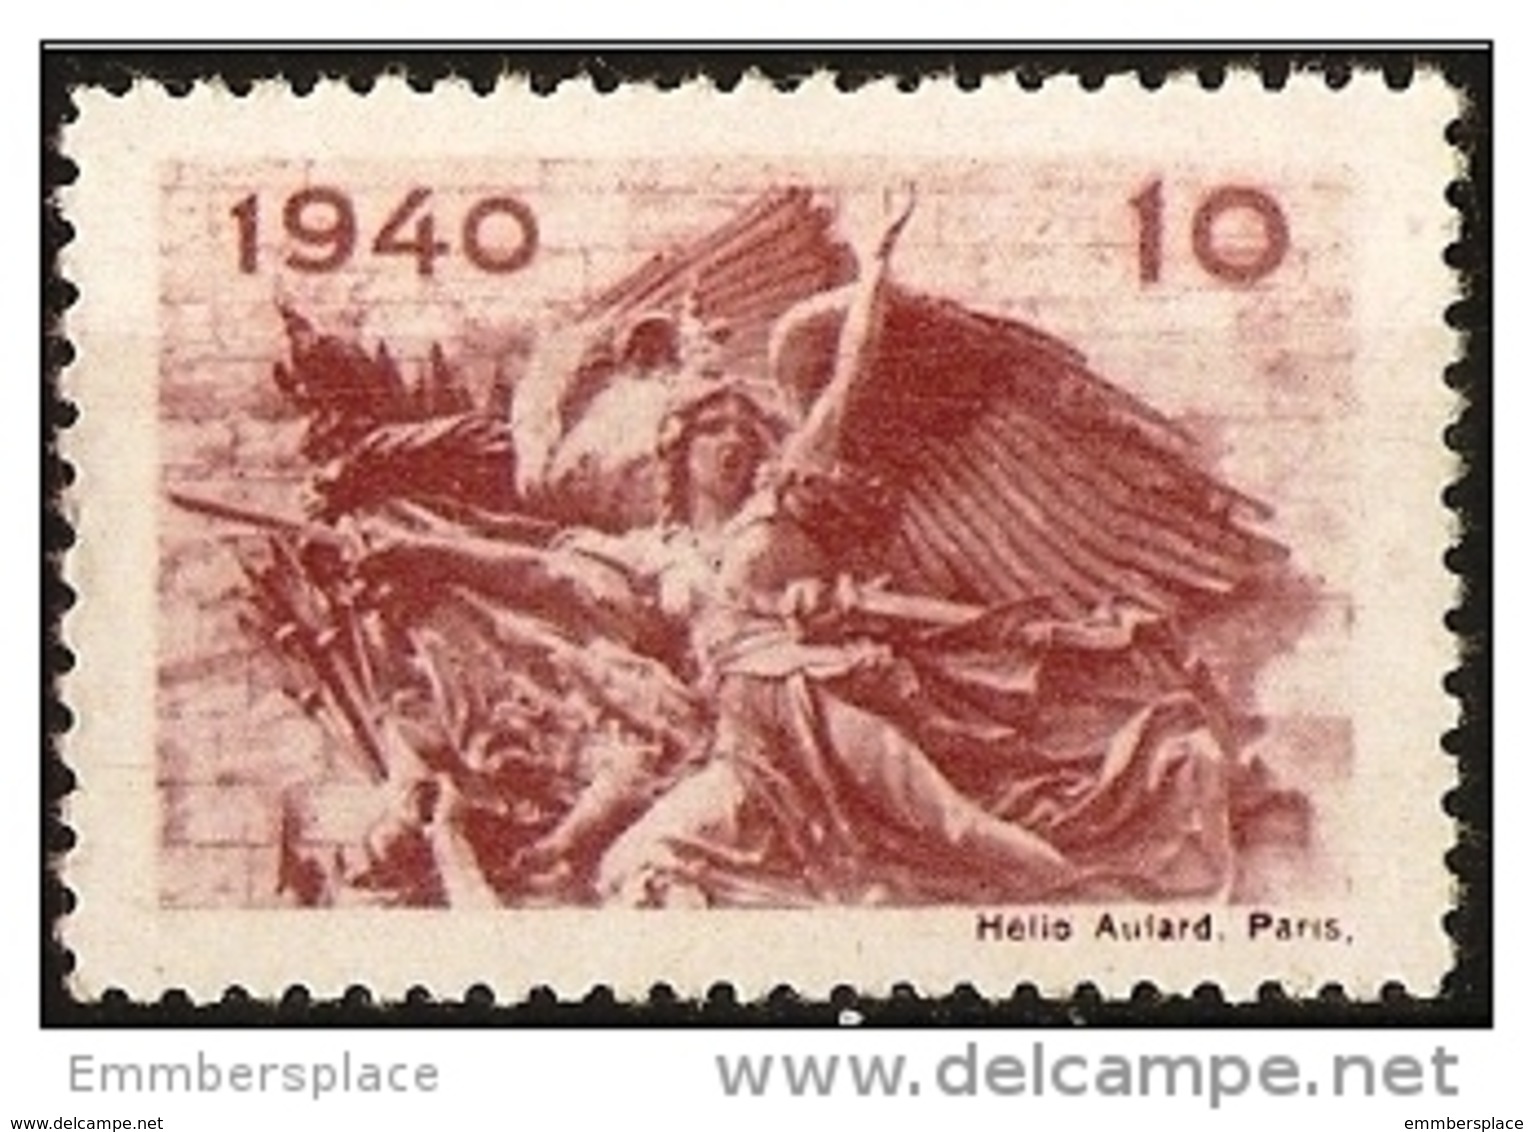 France Vignette - 1940 La Marseillaise Patriotic Poster Stamp - Military Heritage